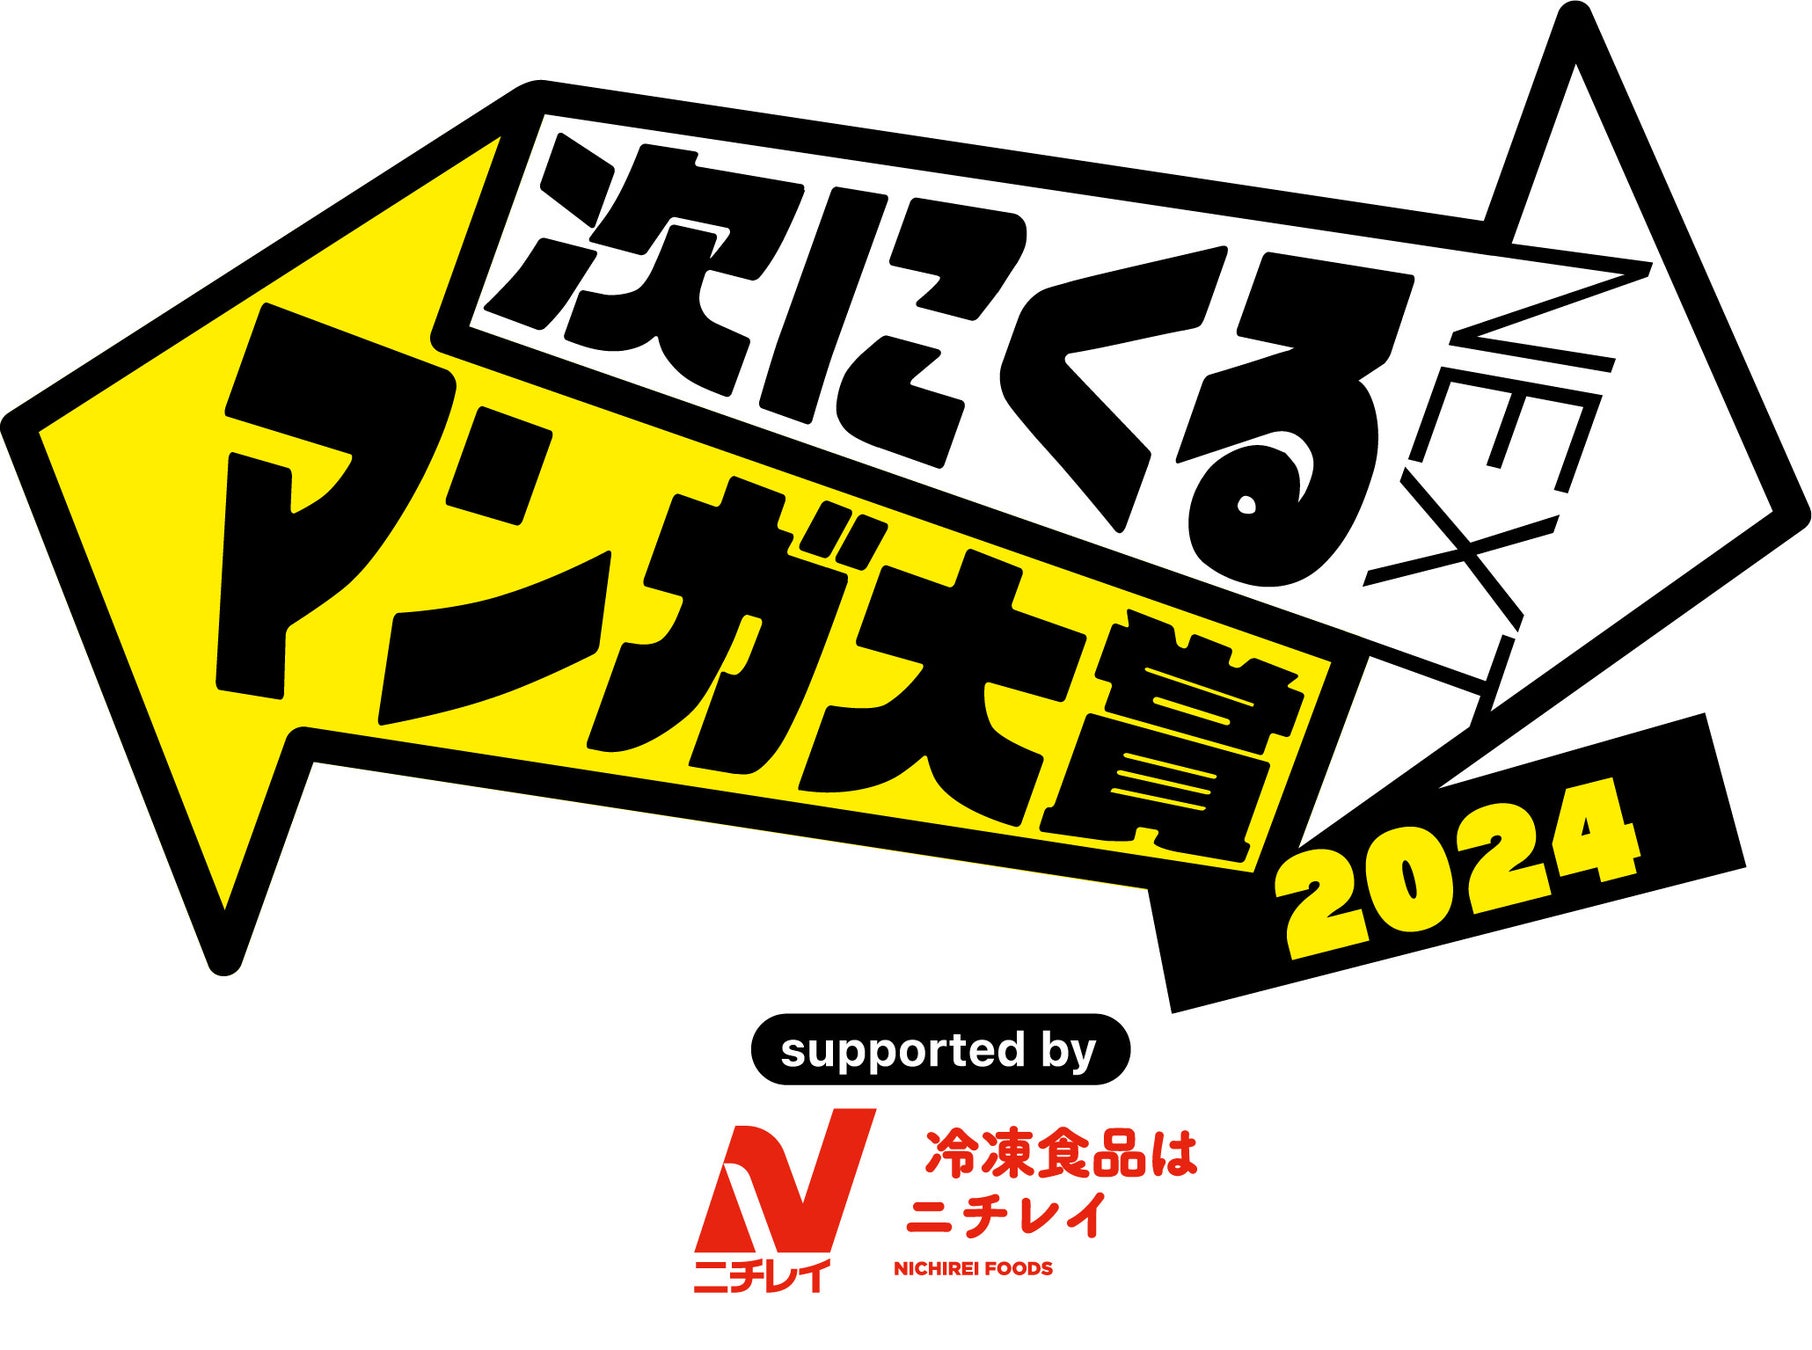 『NARUTO-ナルト- 疾風伝』のイベント、「『NARUTO-ナルト- 疾風伝』うちはサスケ バースデーフェア in アニメイト」の開催が決定！